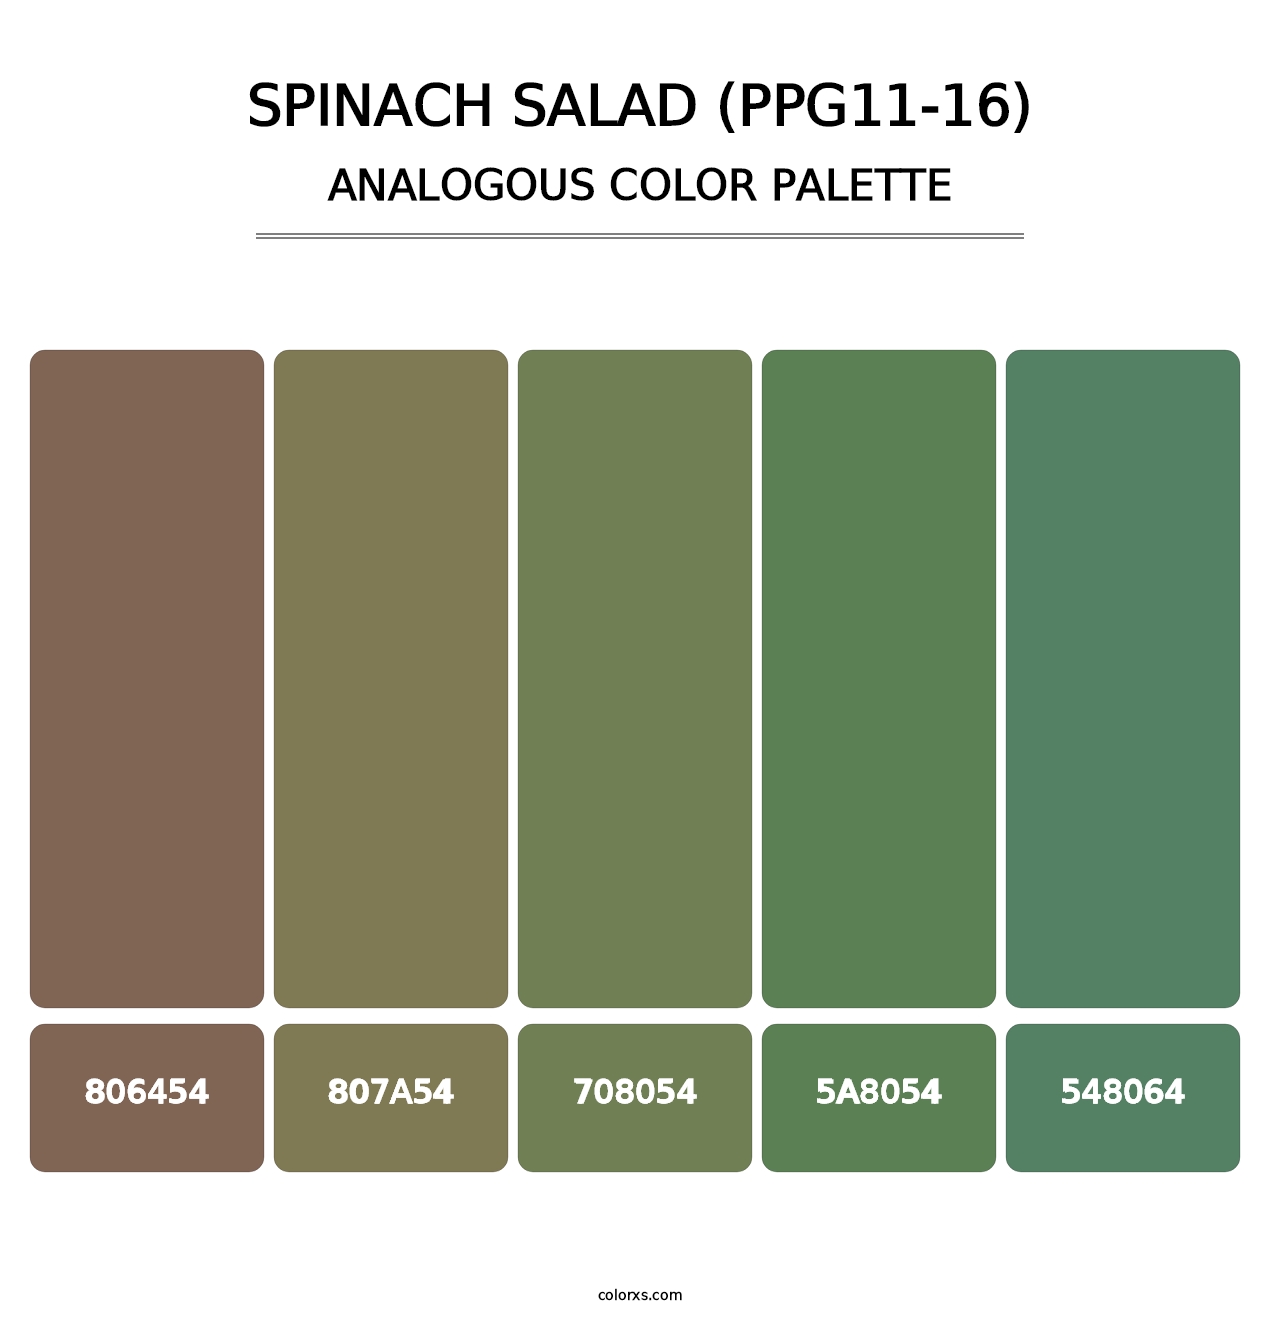 Spinach Salad (PPG11-16) - Analogous Color Palette